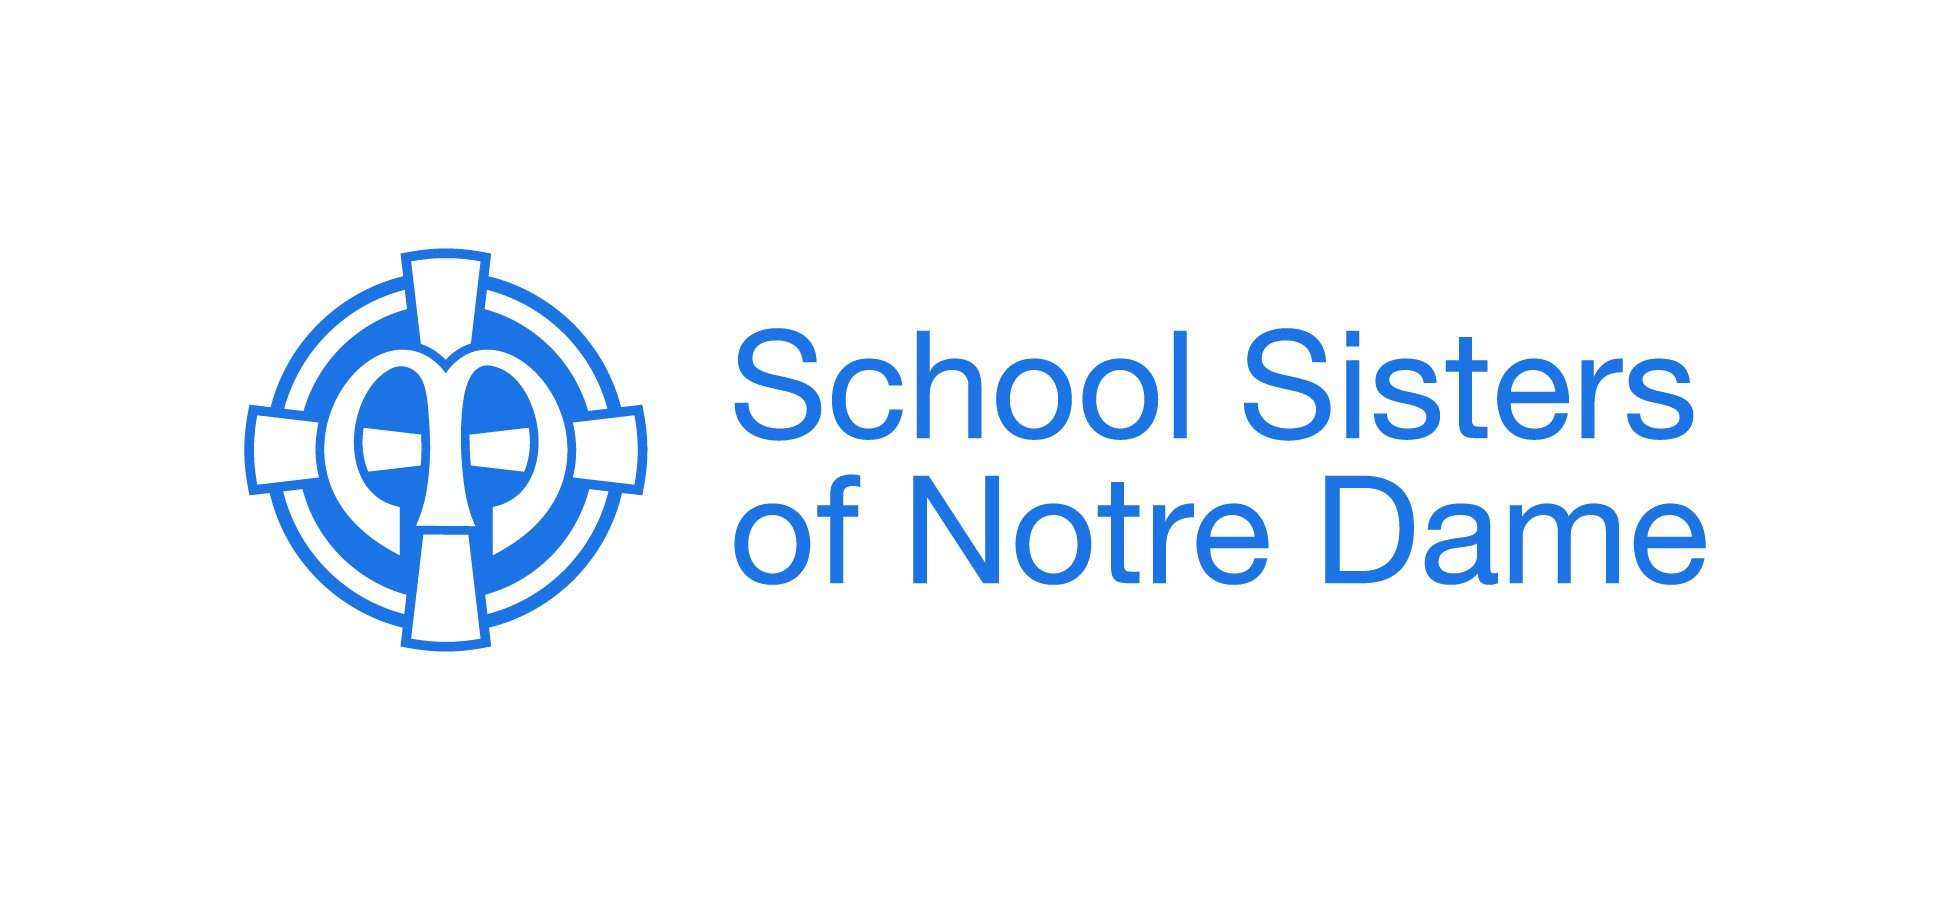 School Sisters of Notre Dame logo